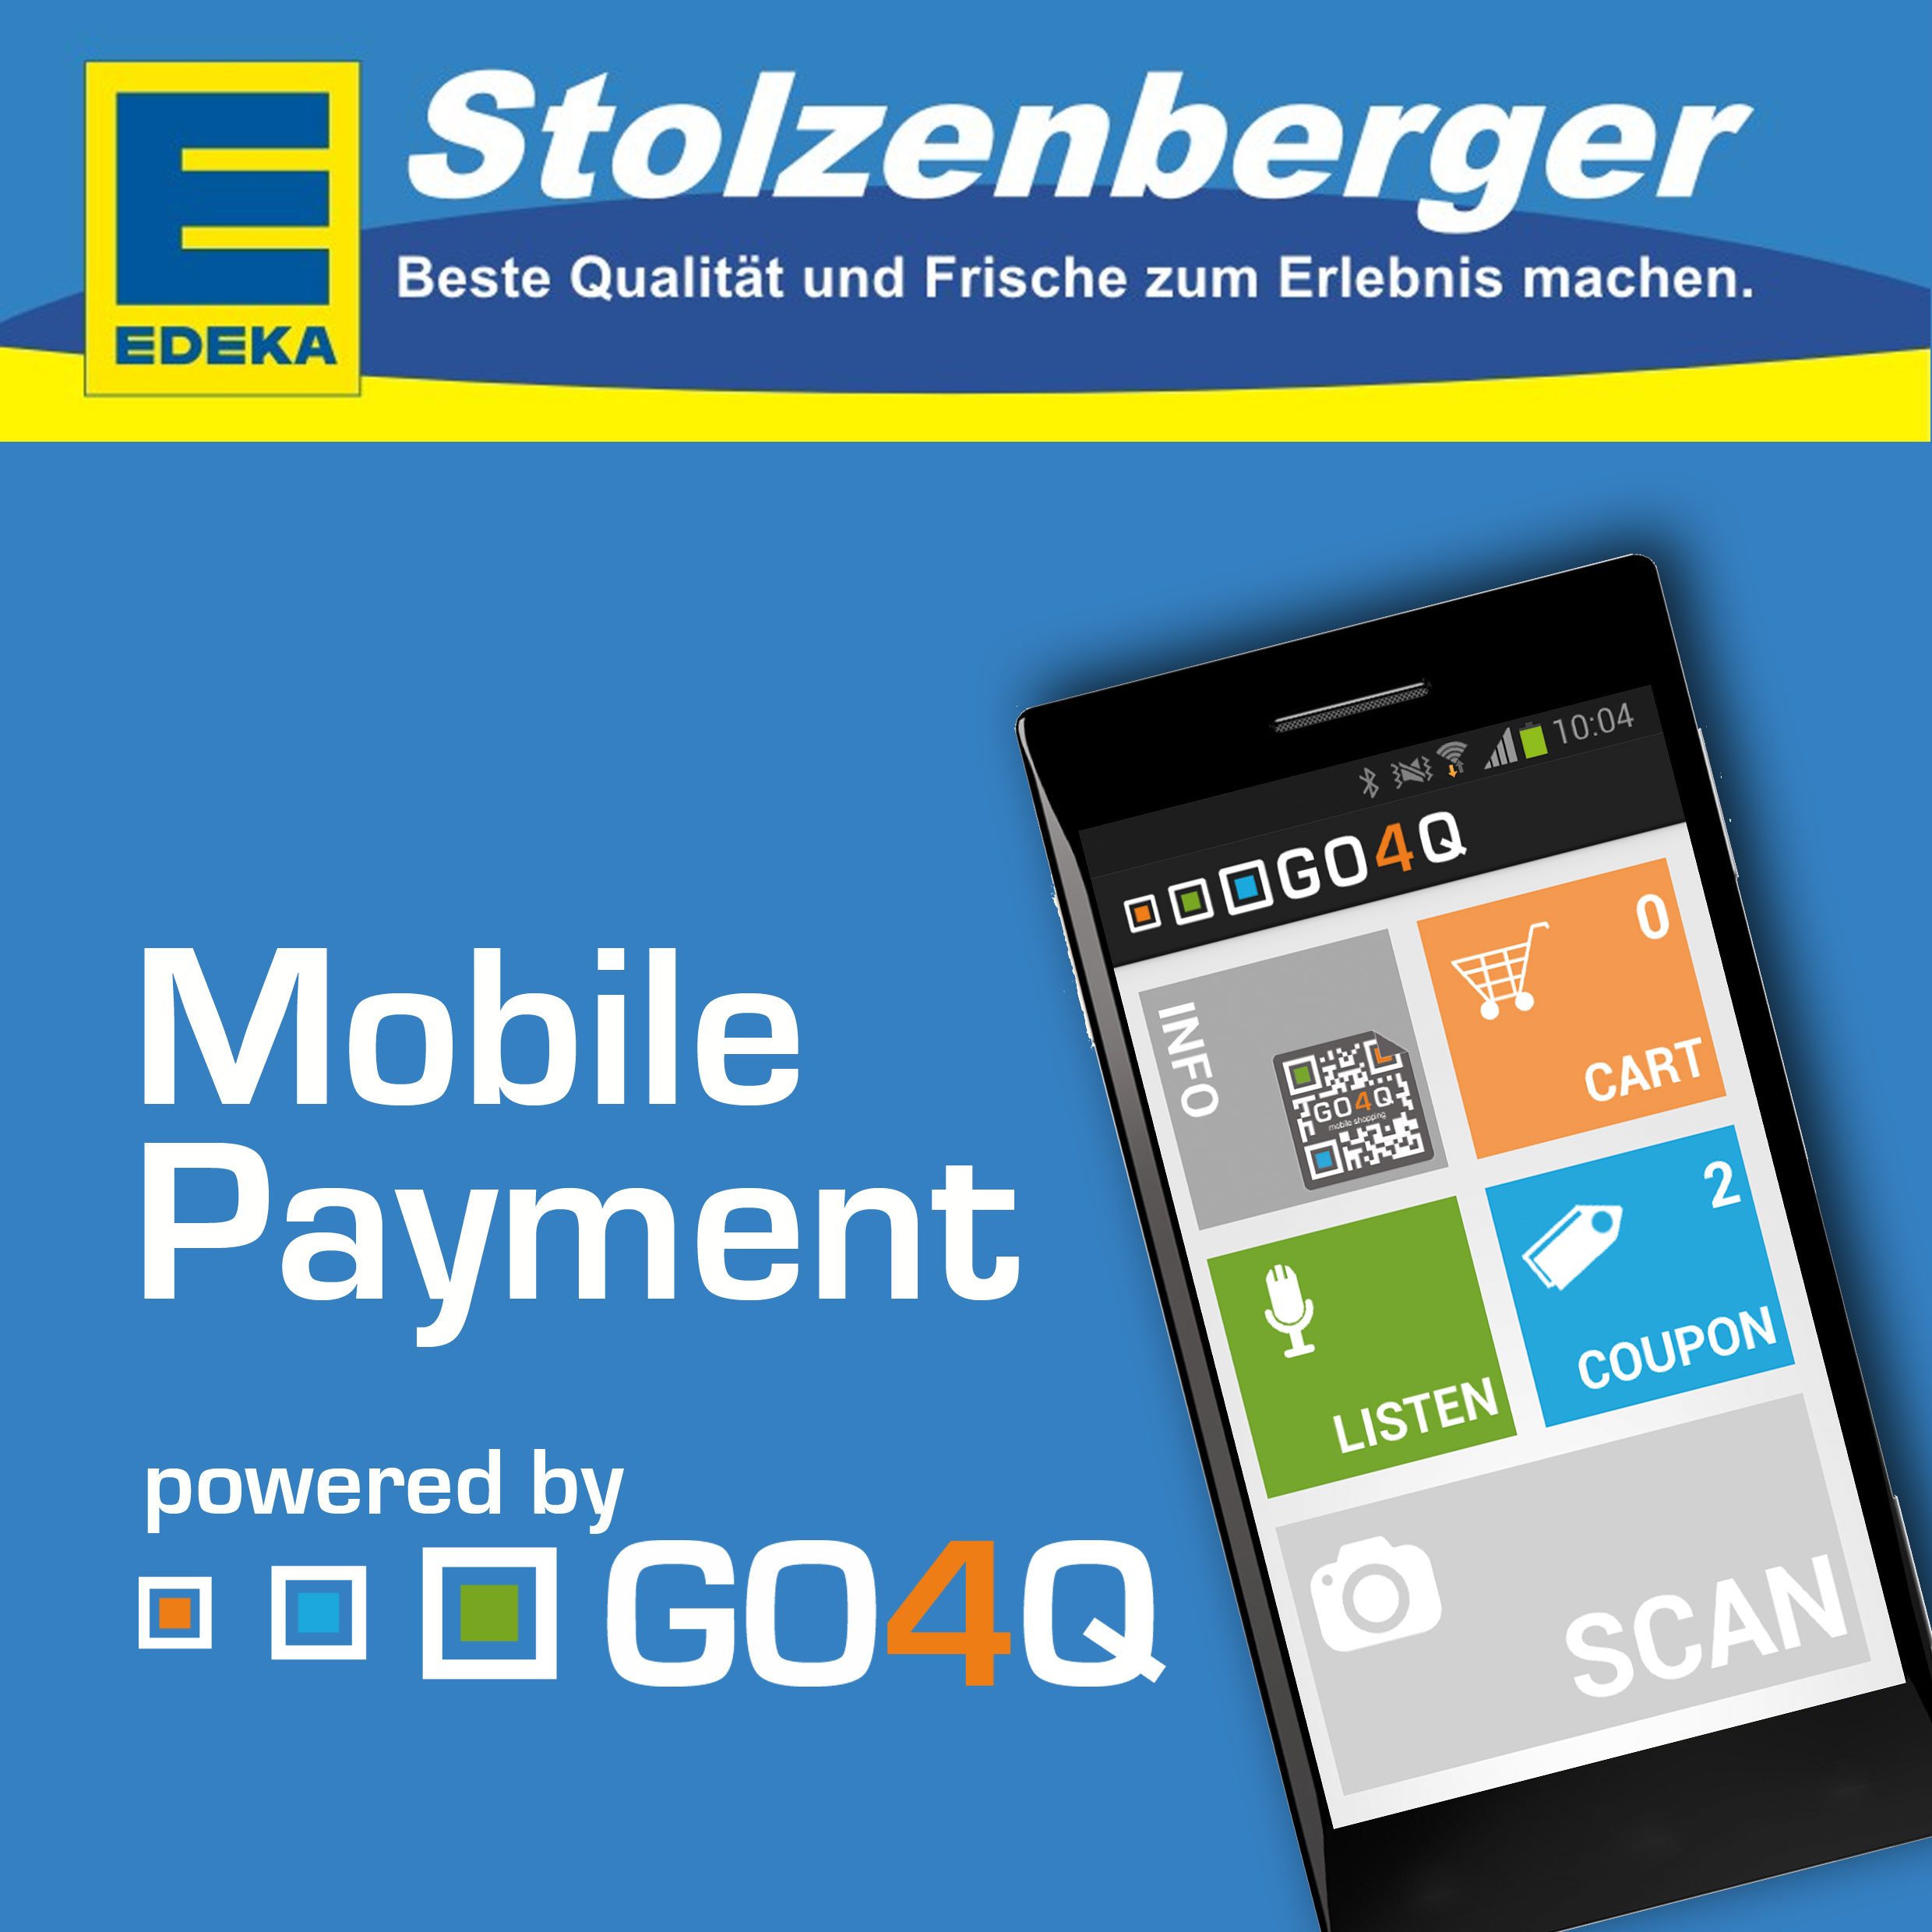 Deutsche-Politik-News.de | Mobile Payment mit GO4Q jetzt auch bei EDEKA Stolzenberger